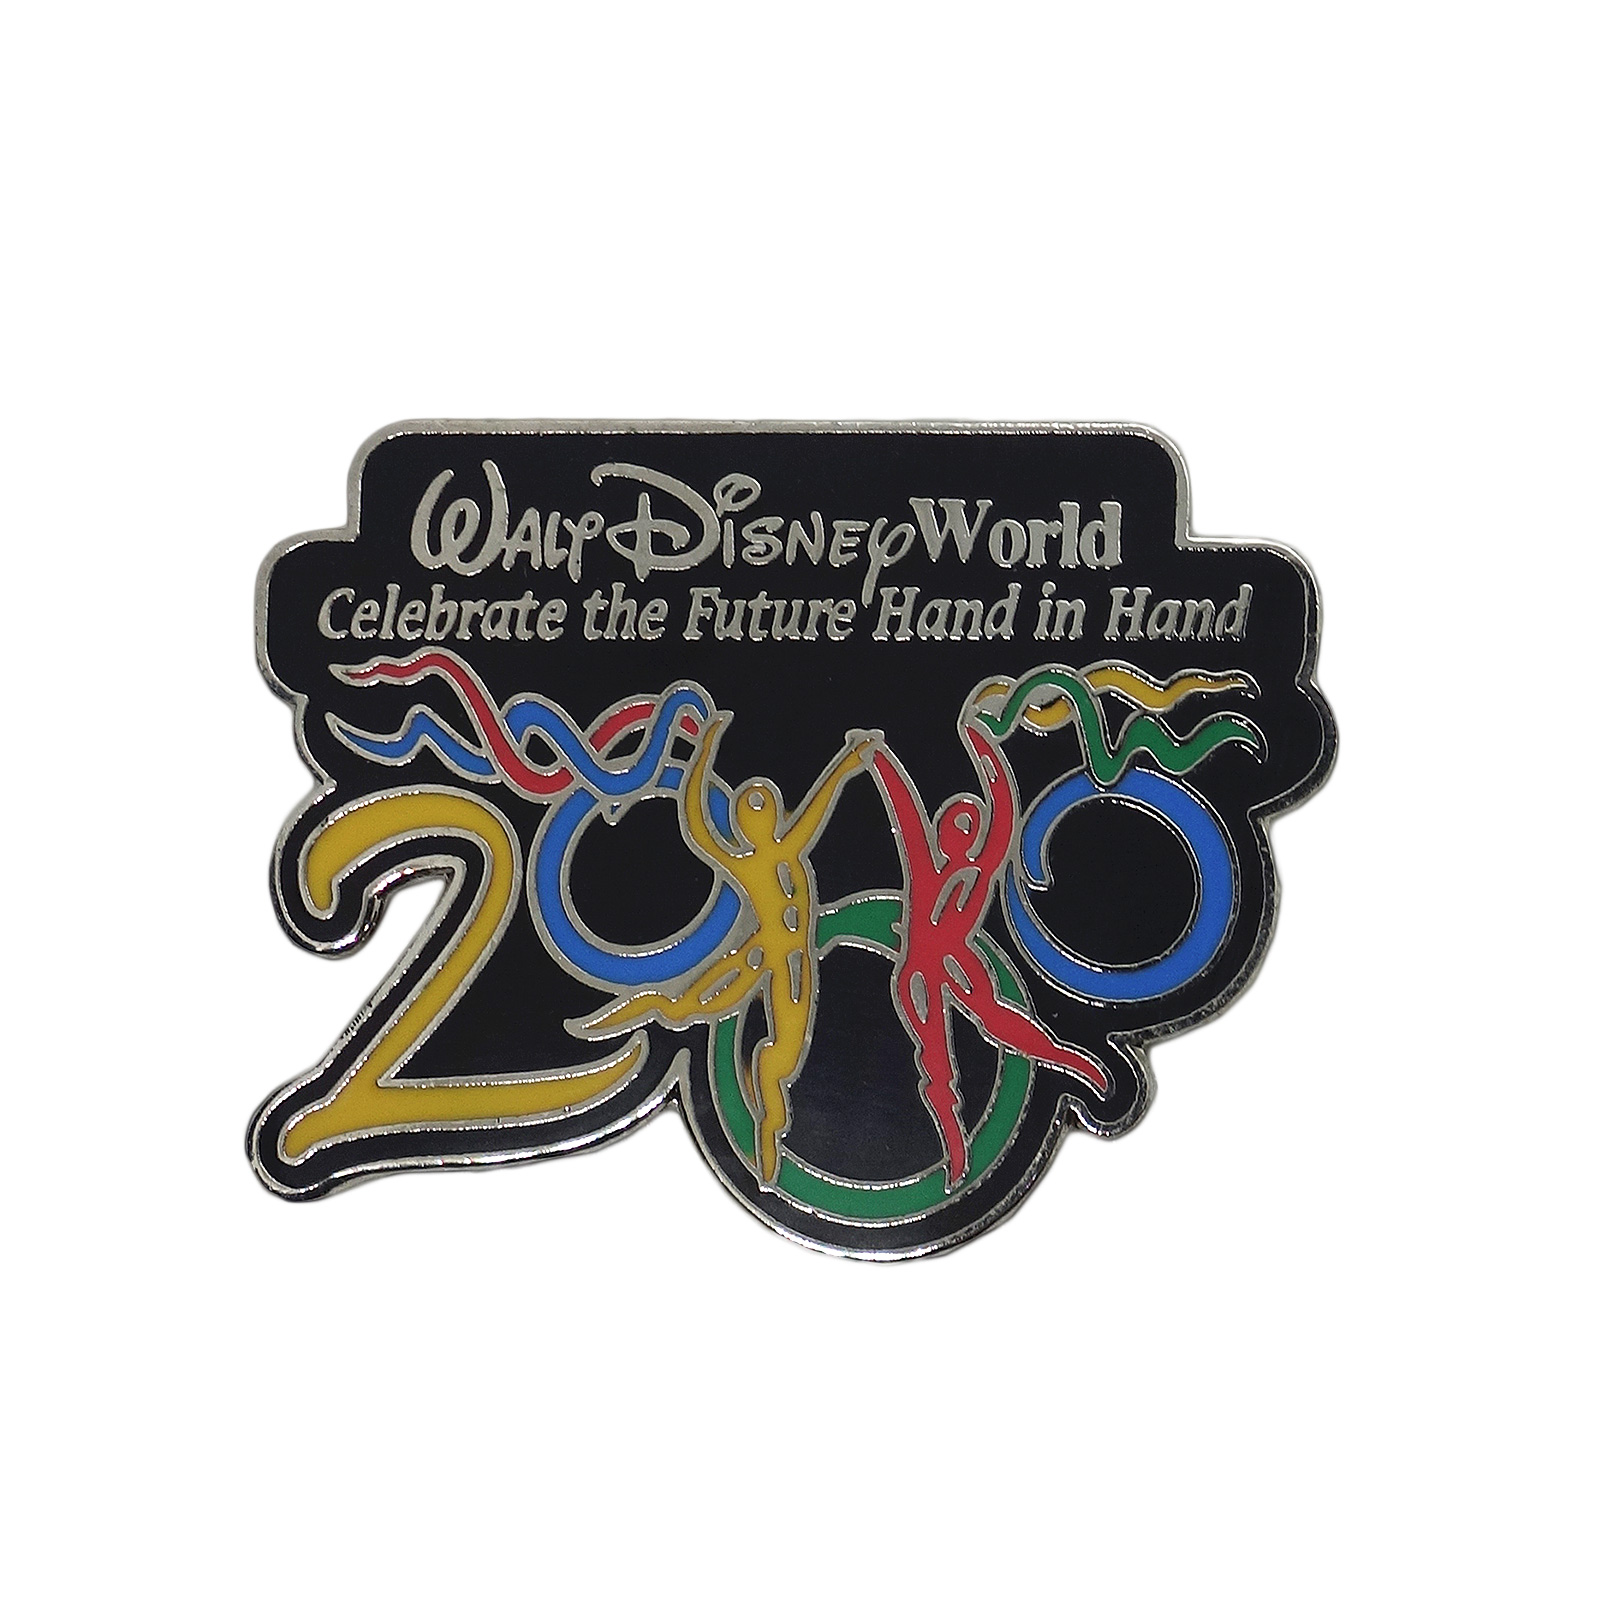 Disney ウォルト・ディズニー・ワールド 2000 ピンズ 留め具付き